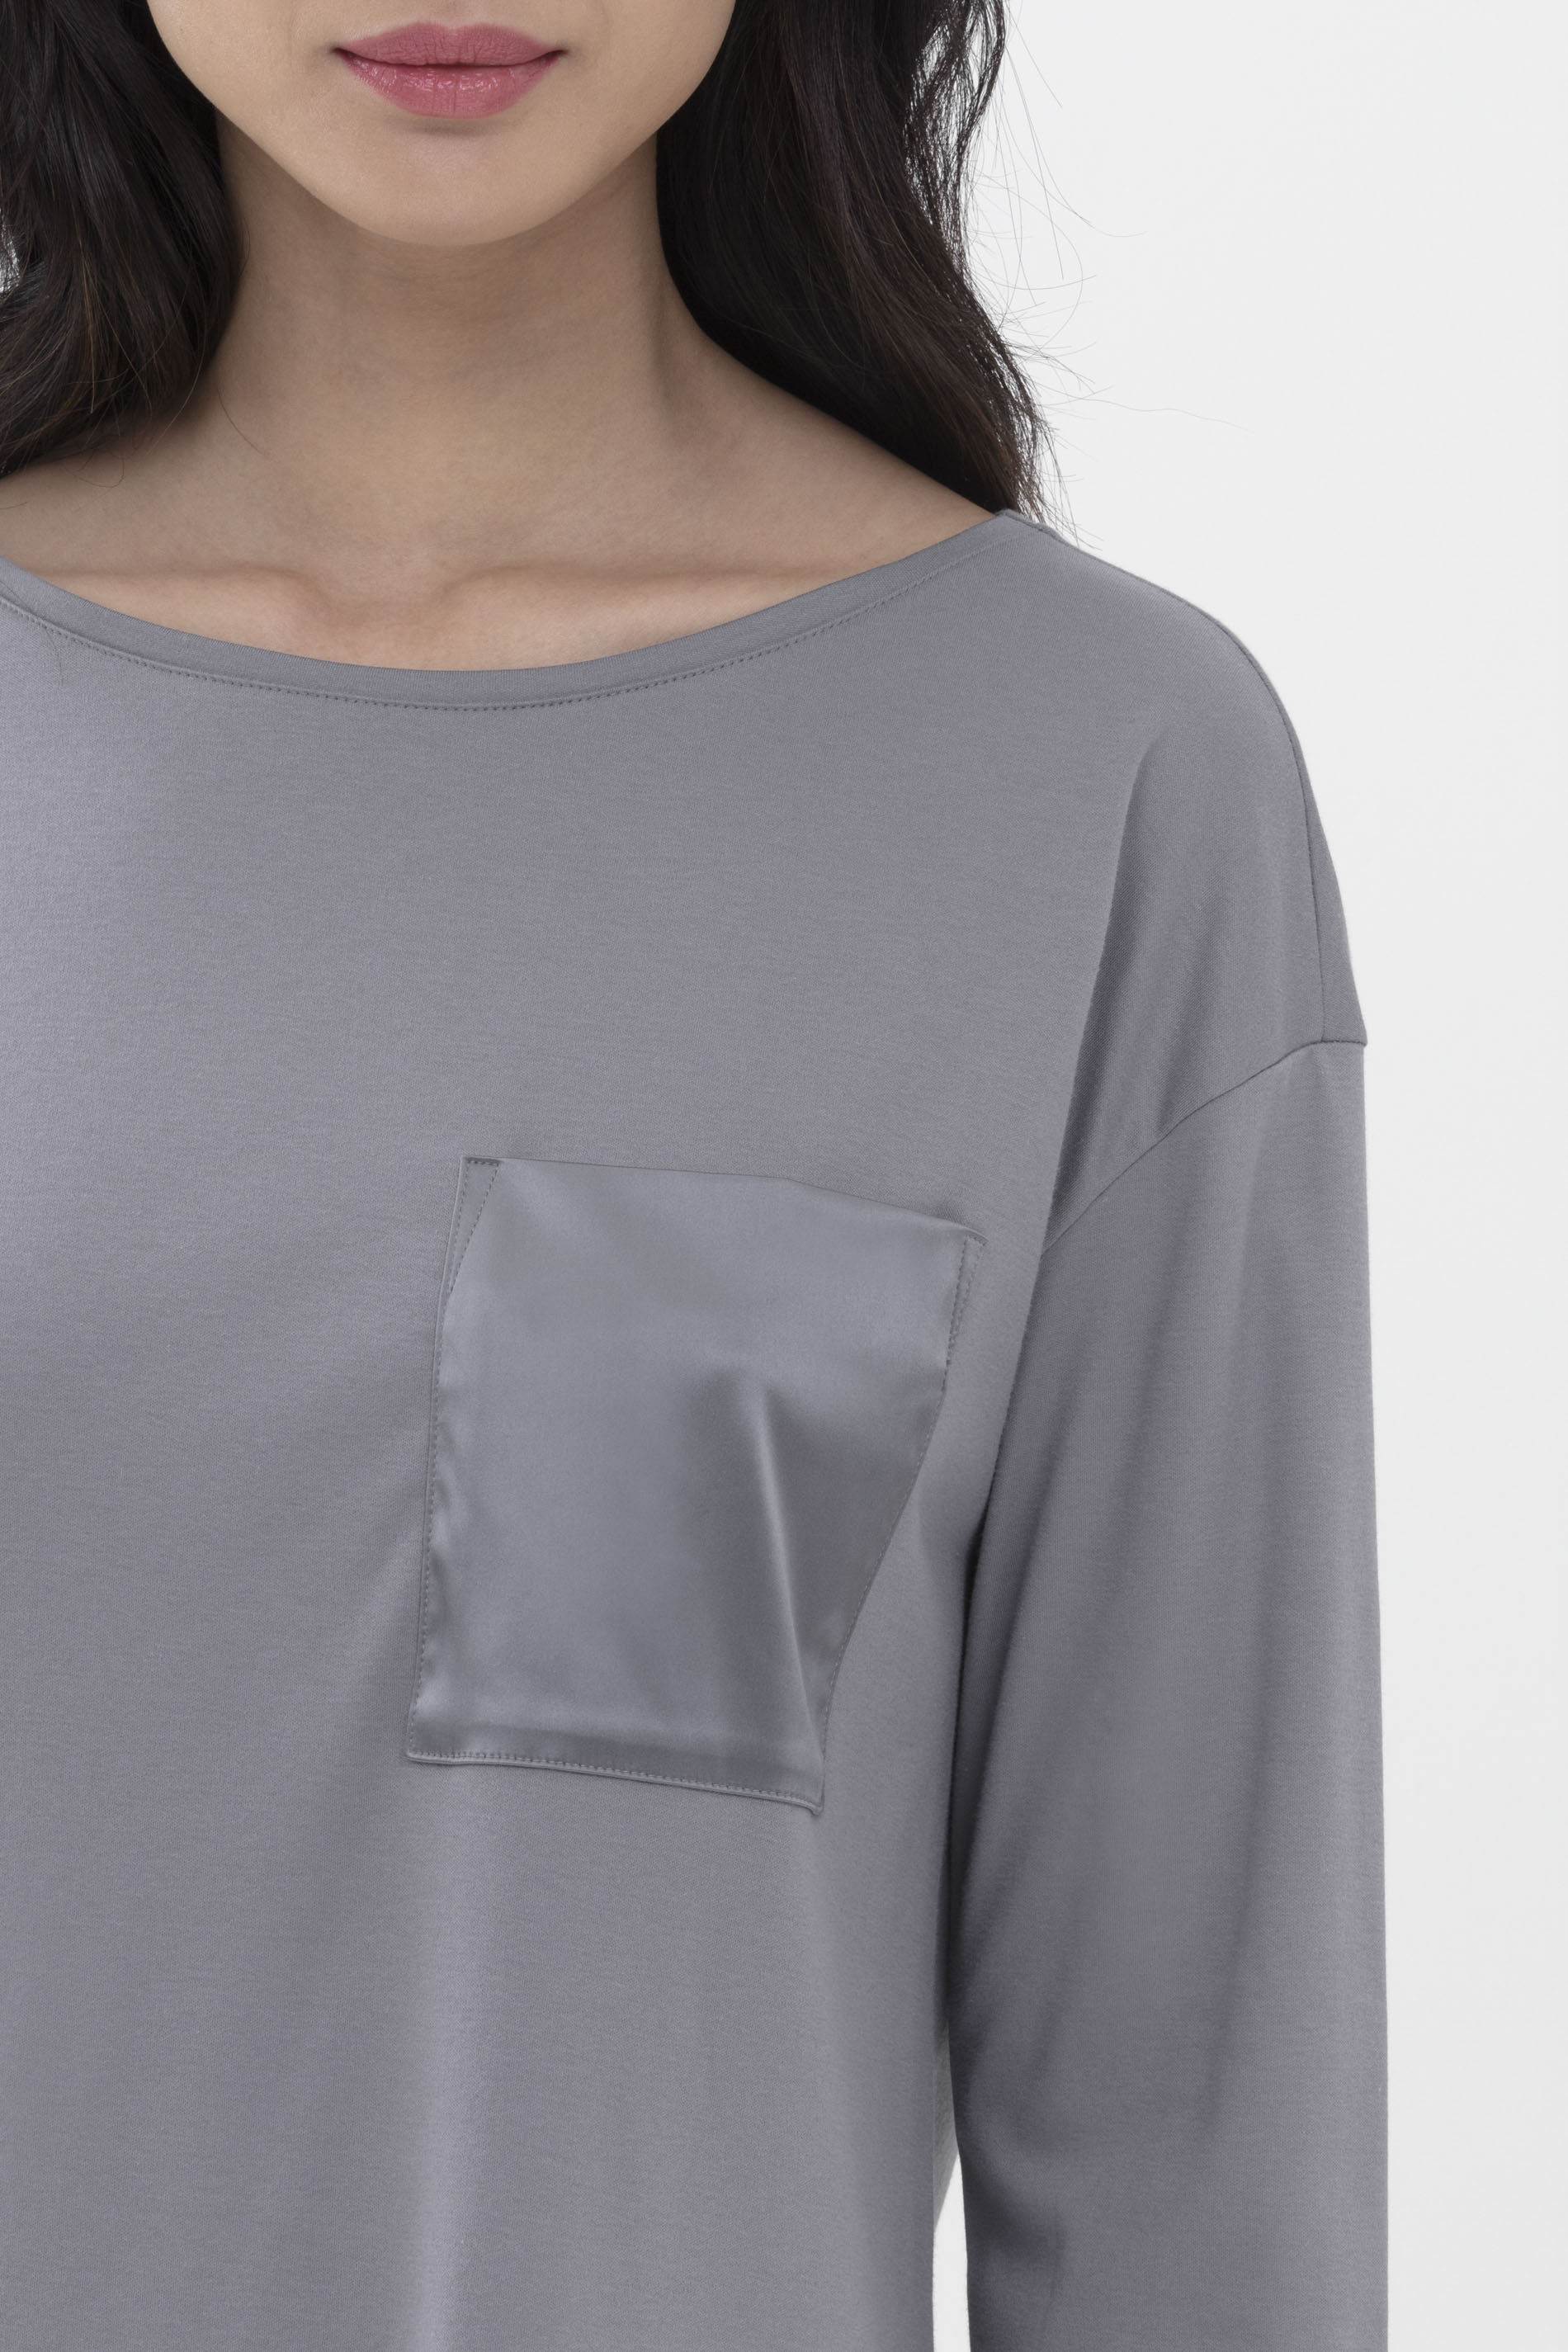 Nachthemd Lovely Grey Serie Sleepsation Detailansicht 01 | mey®